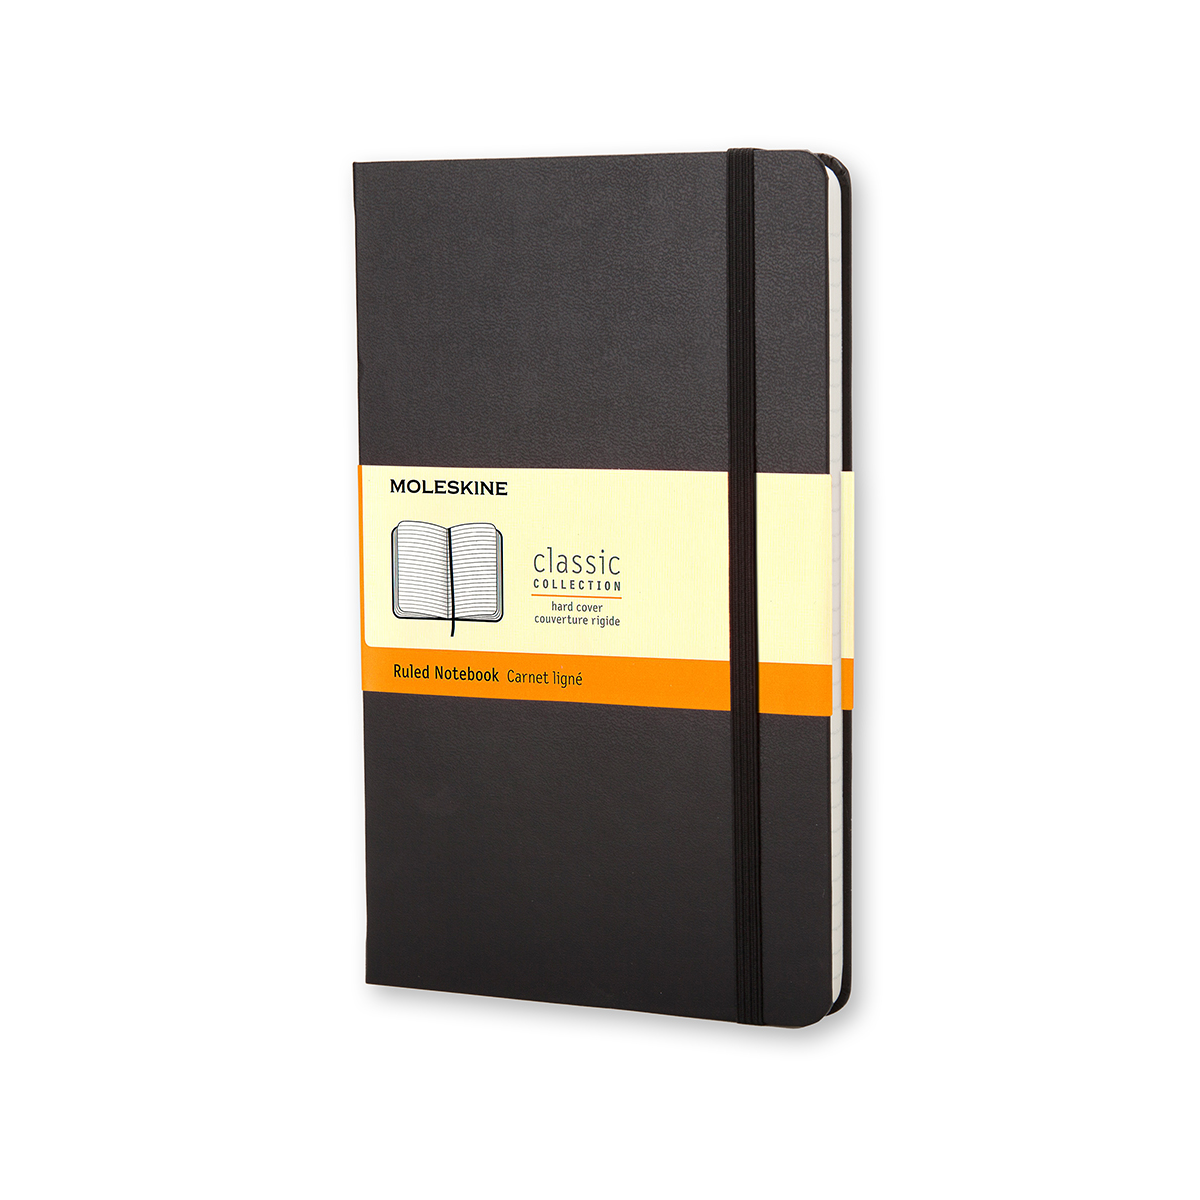 Moleskine Pocket Classic Hard Cover Notebook - Ruled